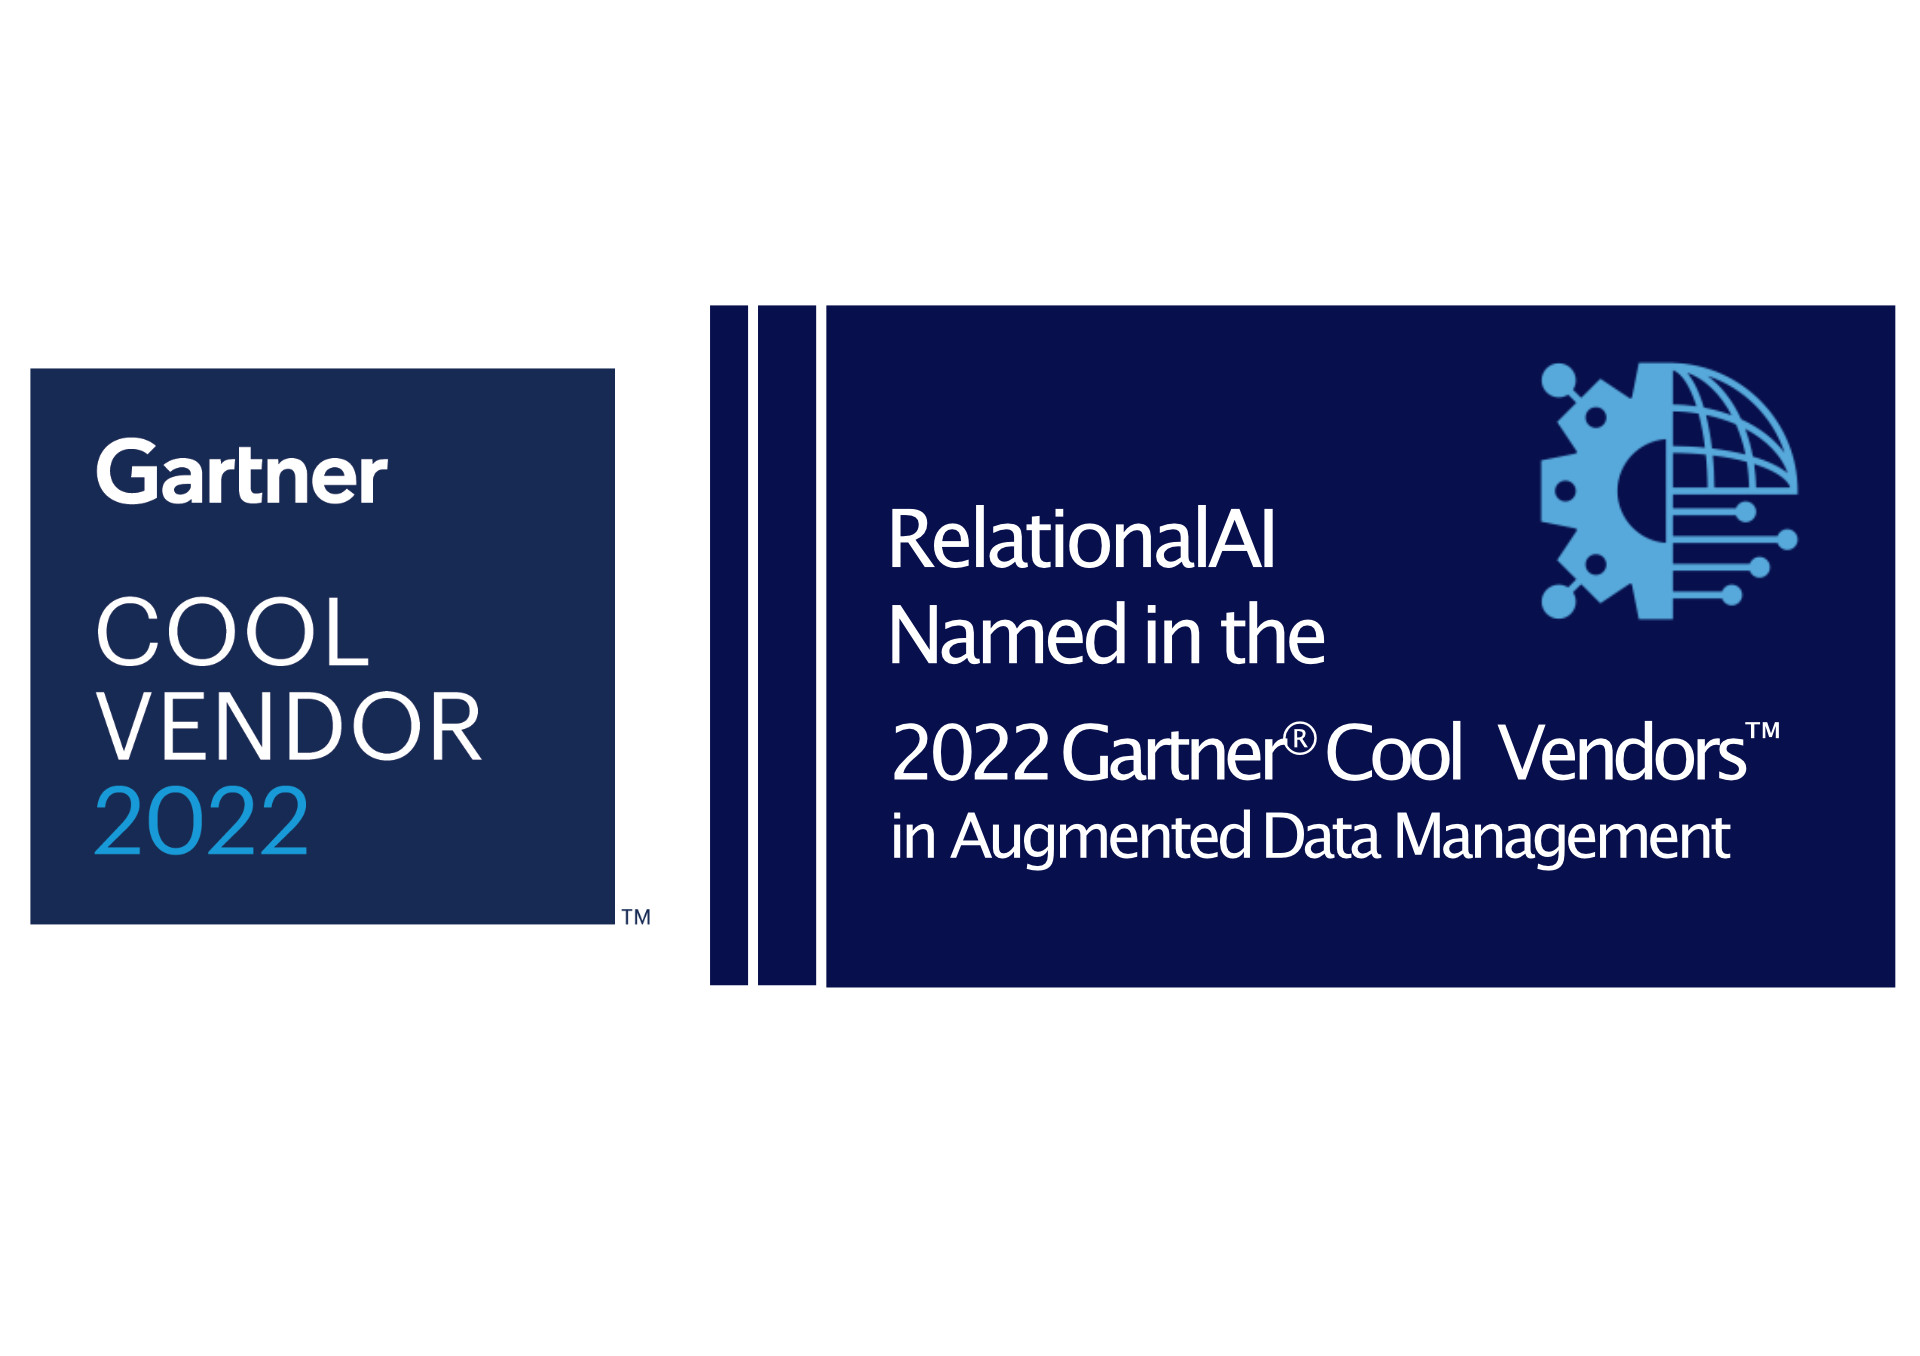 RelationalAI Named in the 2022 Gartner® Cool Vendors in Augmented Data Management image